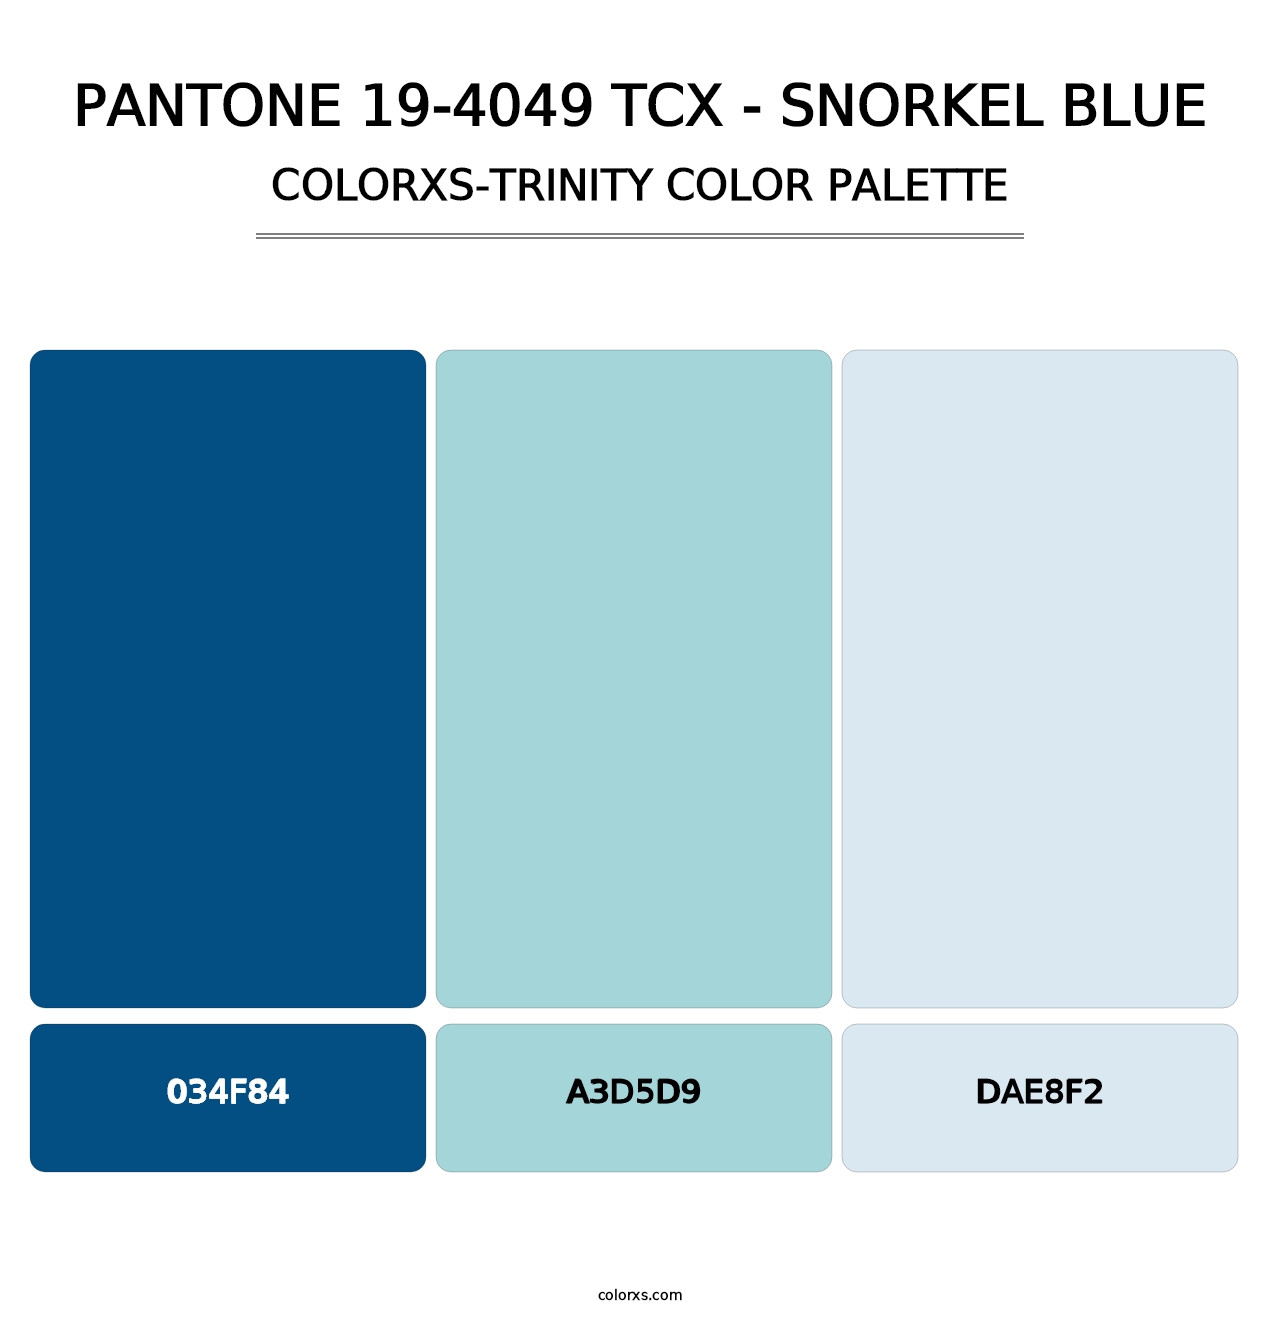 PANTONE 19-4049 TCX - Snorkel Blue - Colorxs Trinity Palette